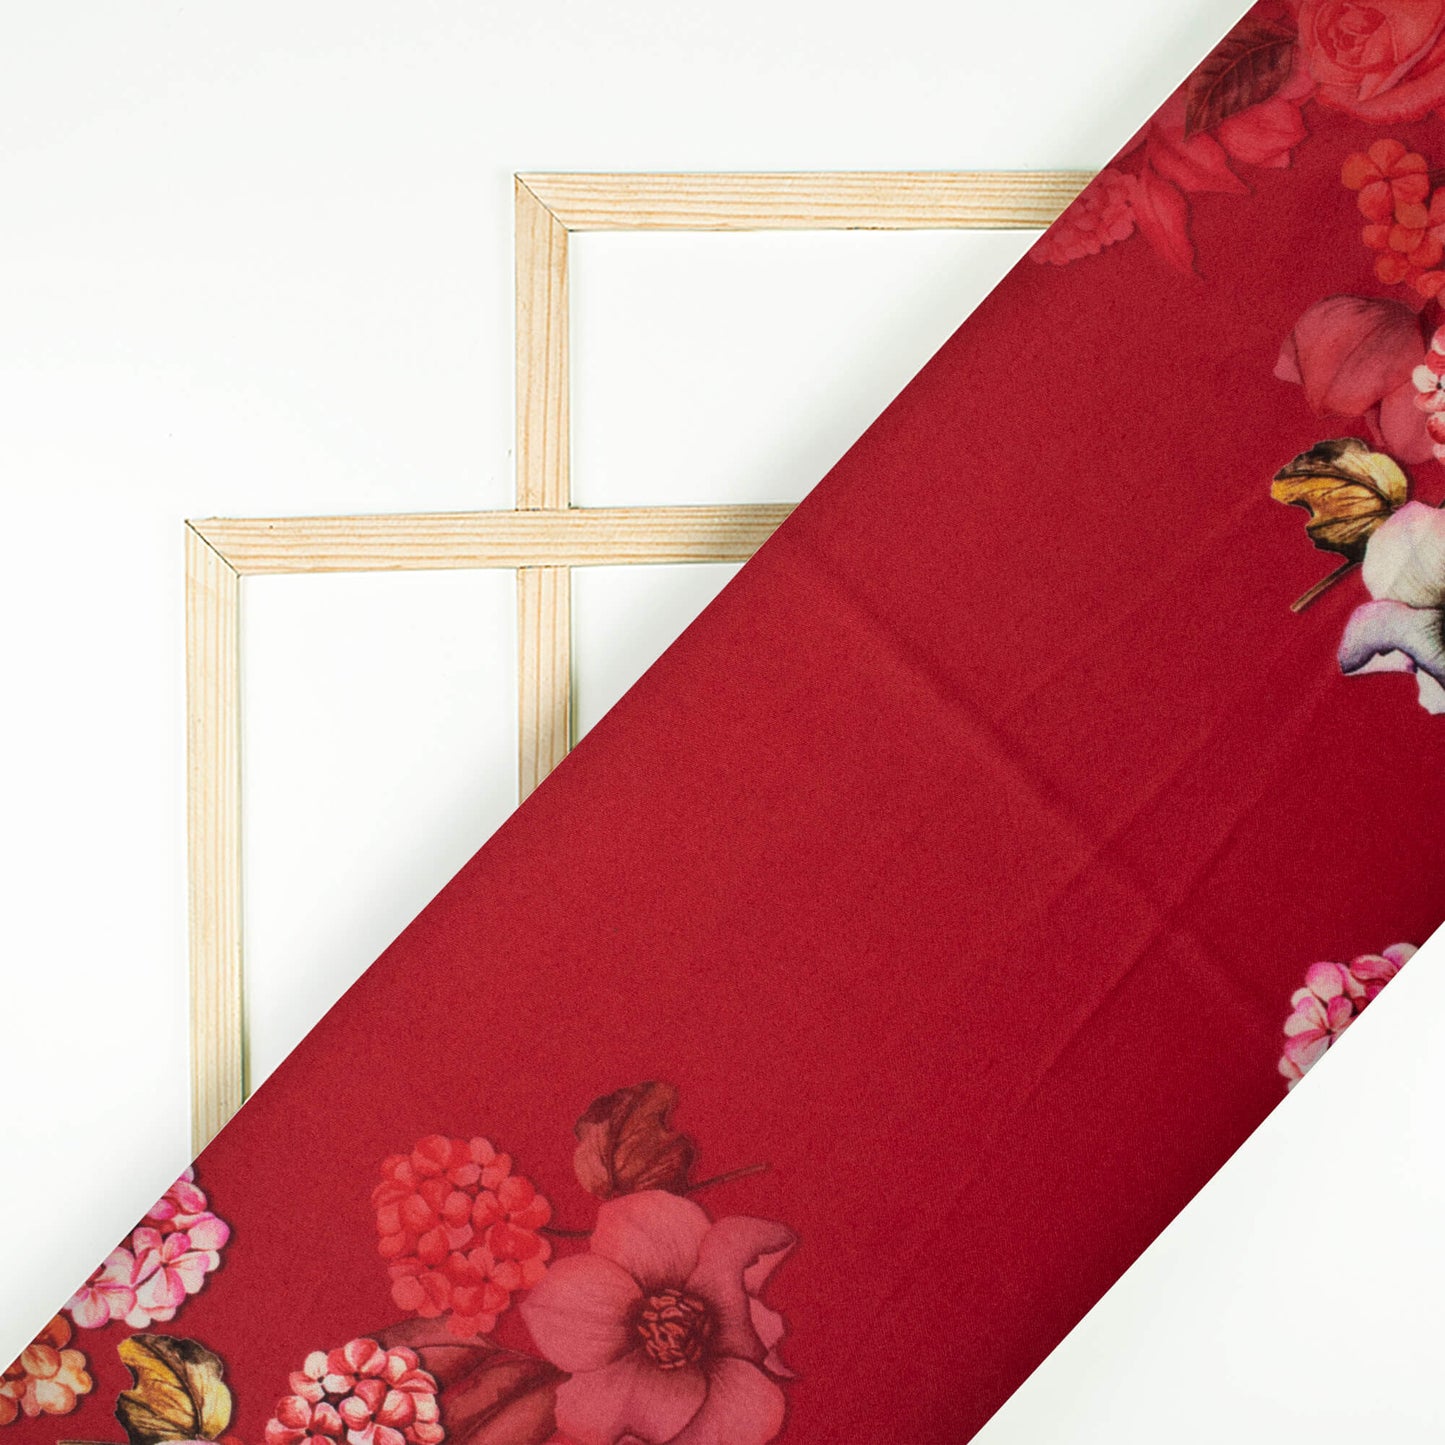 Maroon And Pink Floral Pattern Digital Print Premium Lush Satin Fabric